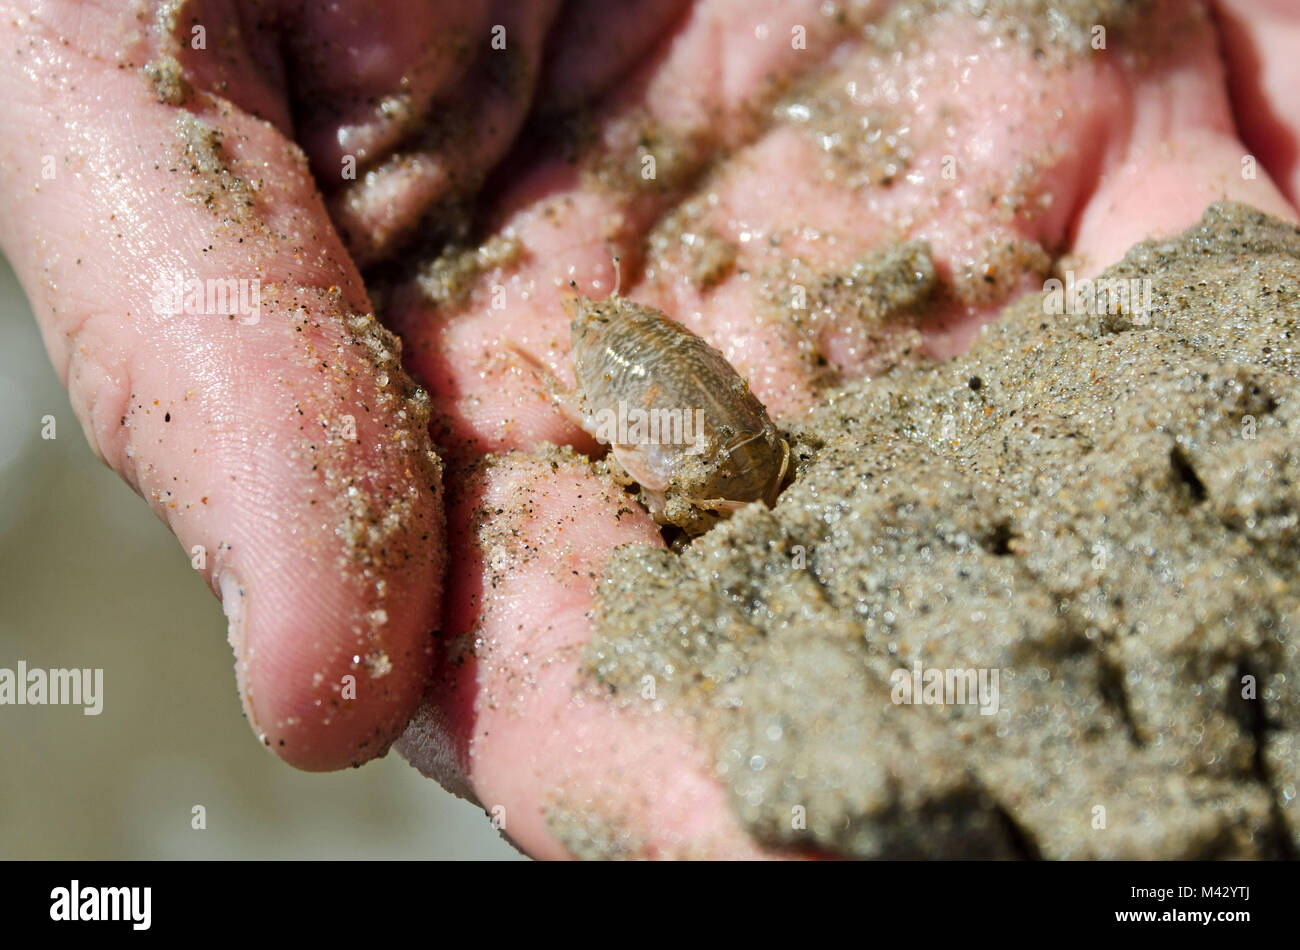 Hand holding a mole crab (Emerita analoga), El Matador State Beach, Malibu, California. Stock Photo